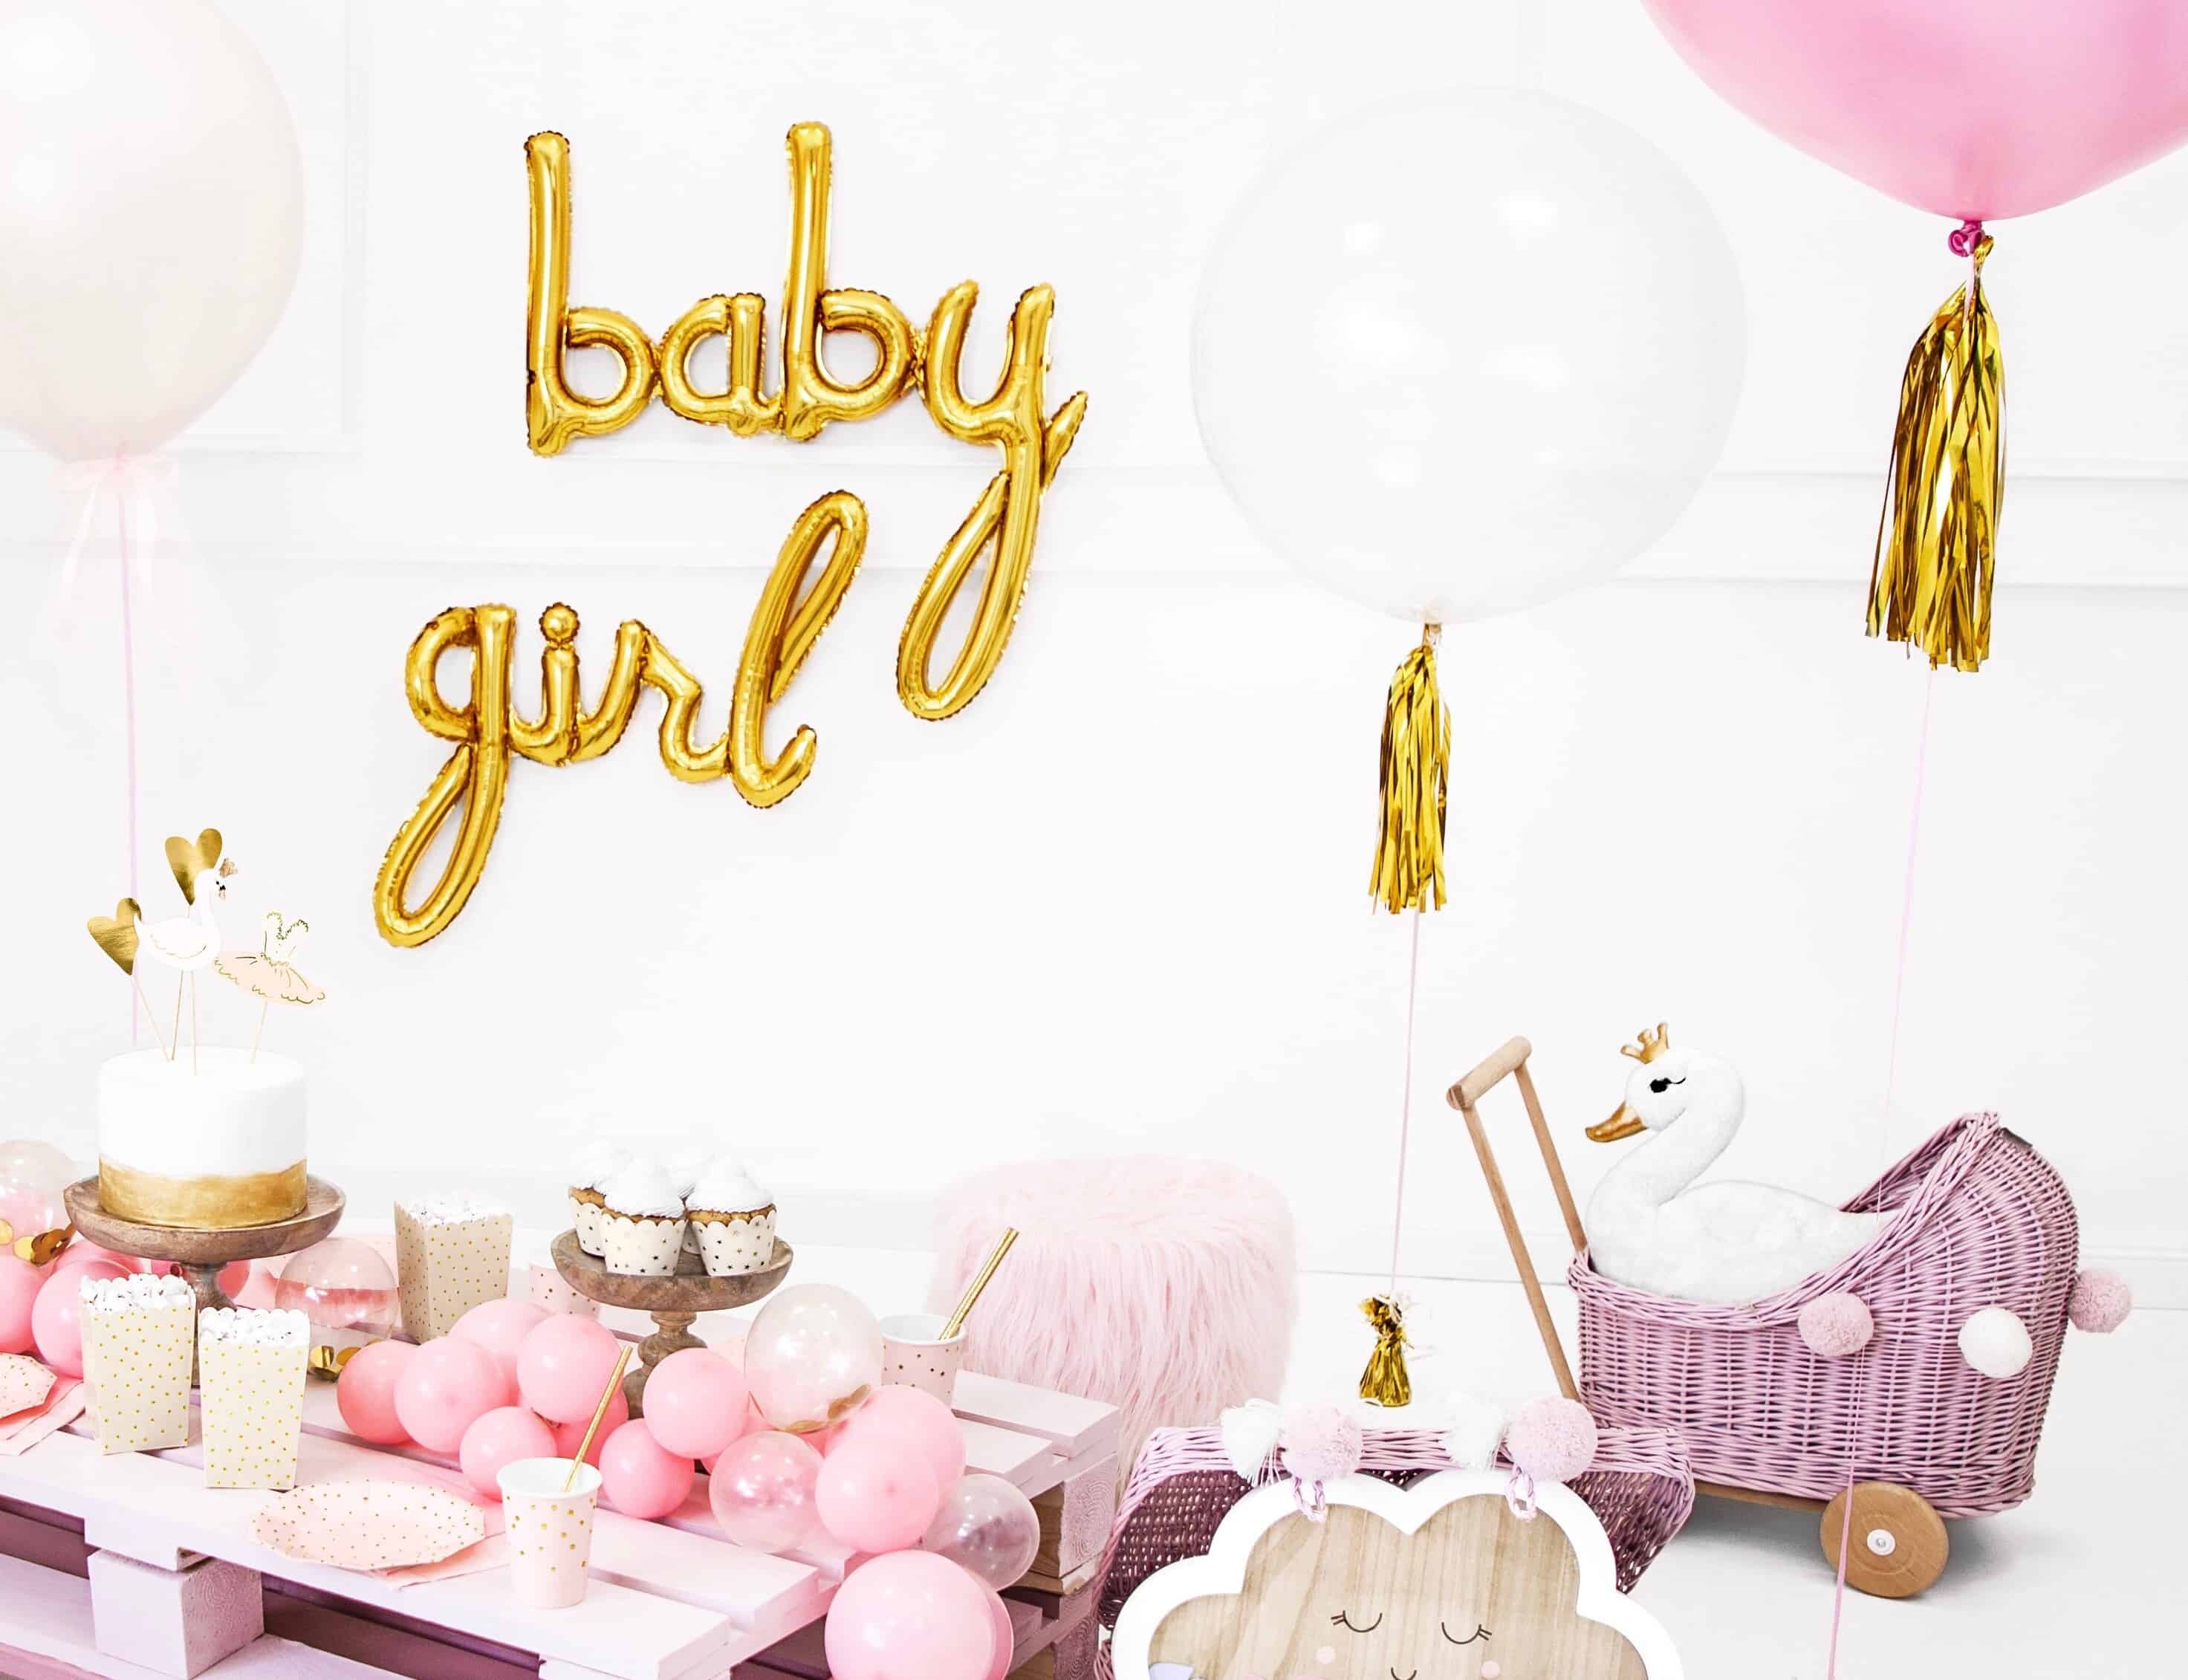 baby girl foil balloon